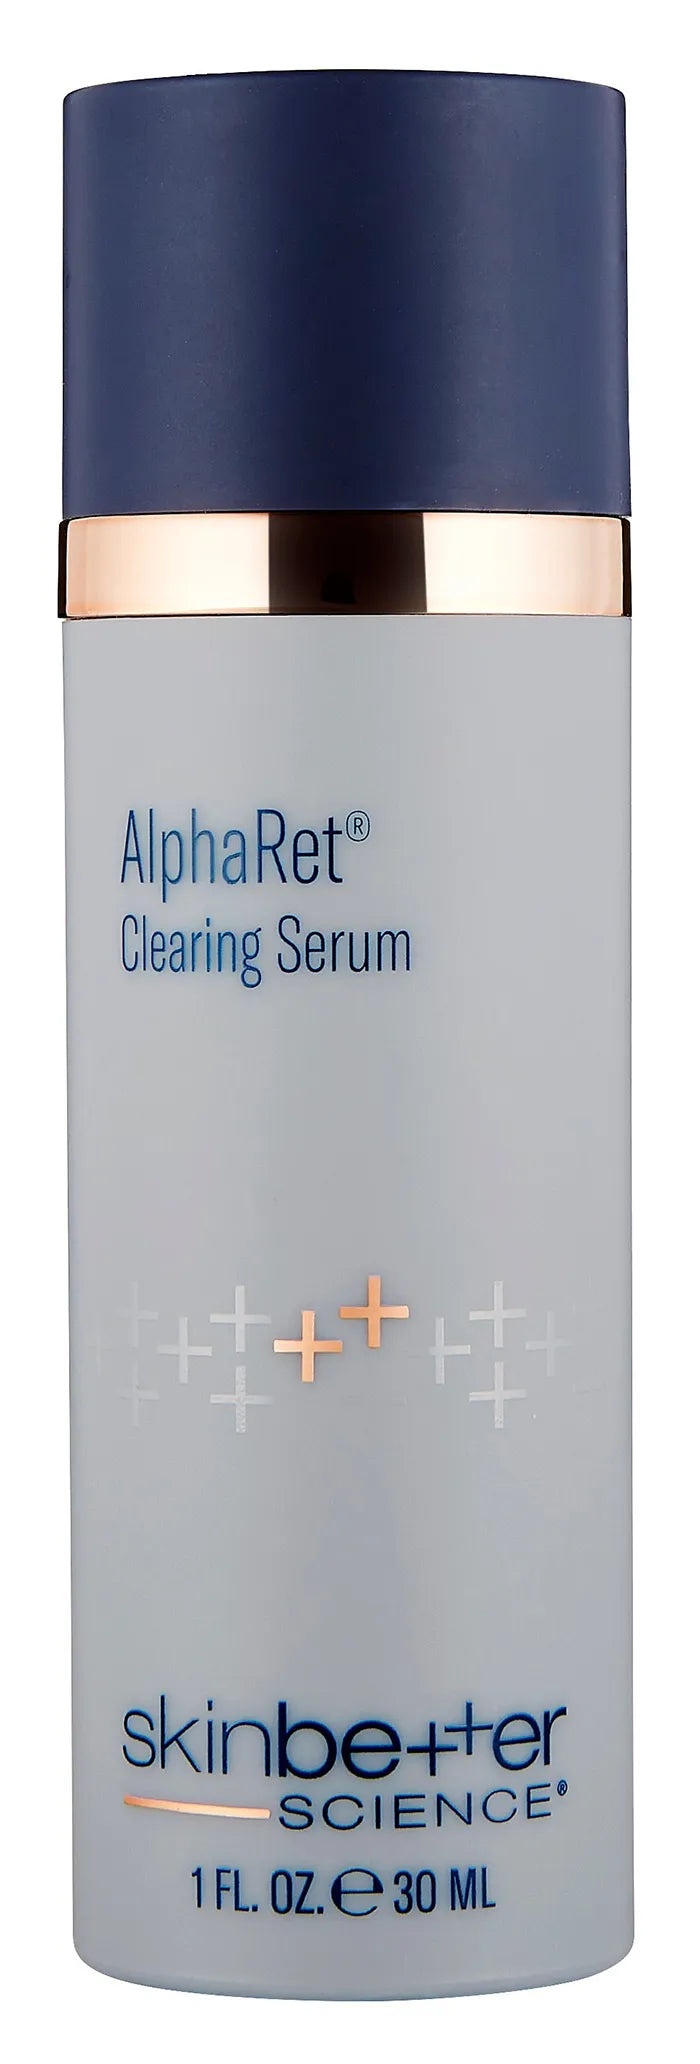 AlphaRet Clearing Serum 30 mL SkinBetter